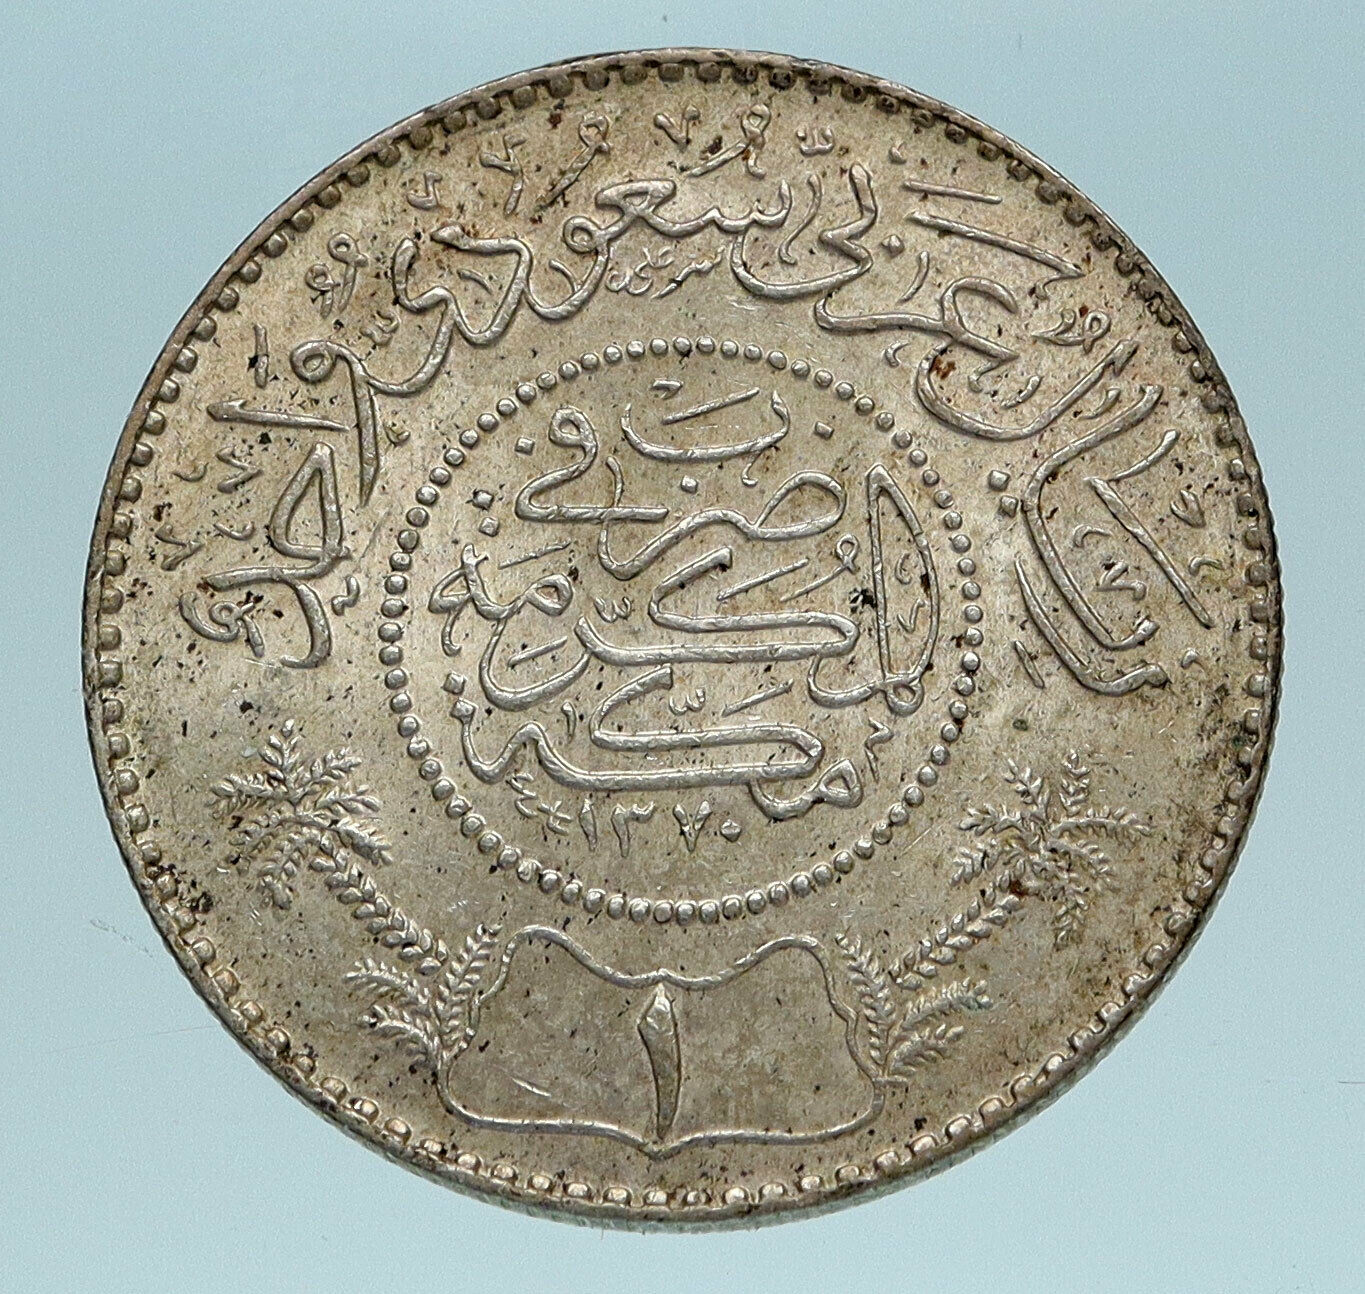 1952 SAUDI ARABIA King Saud Genuine Silver OLD Riyal Ornate Arabic Coin i83489